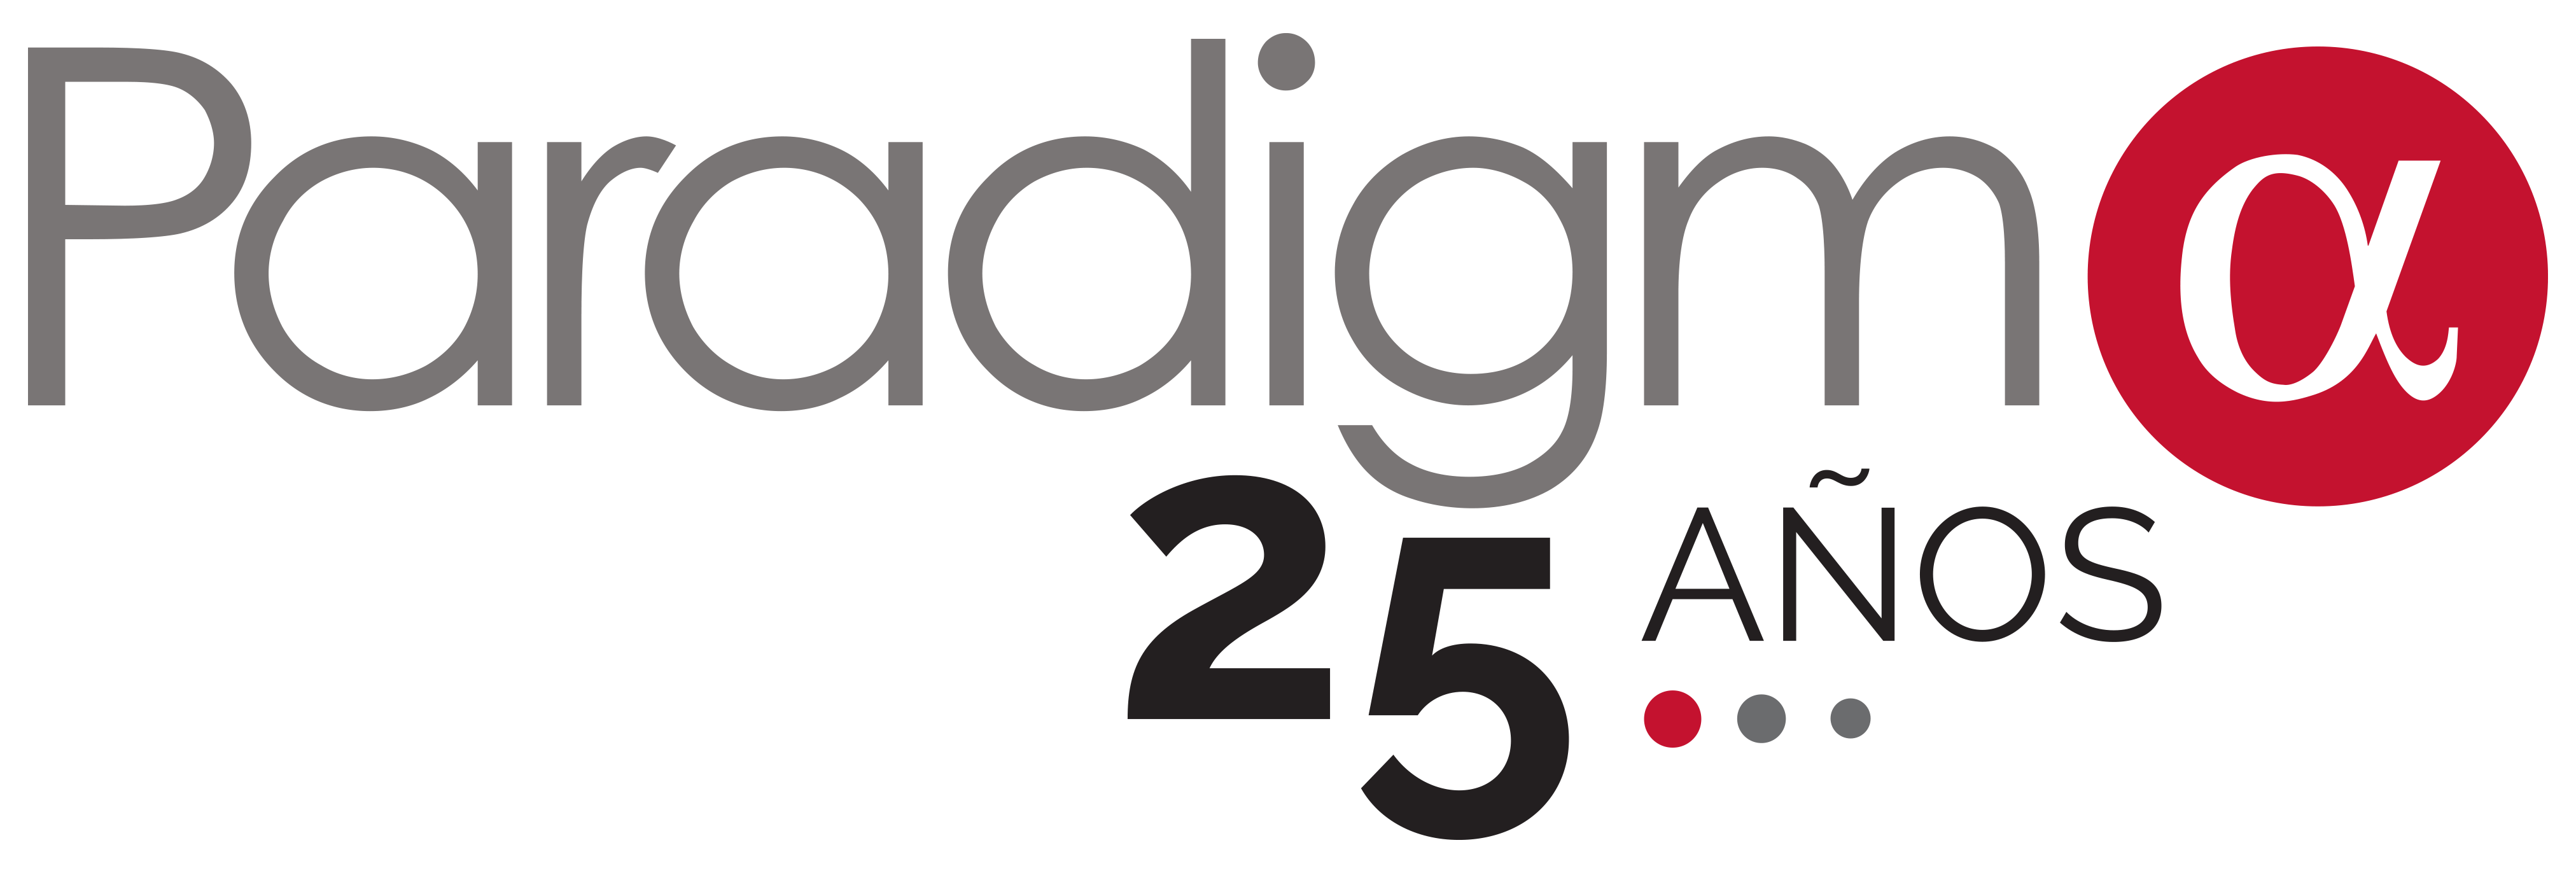 Logos_Paradigma25_Años_RGB